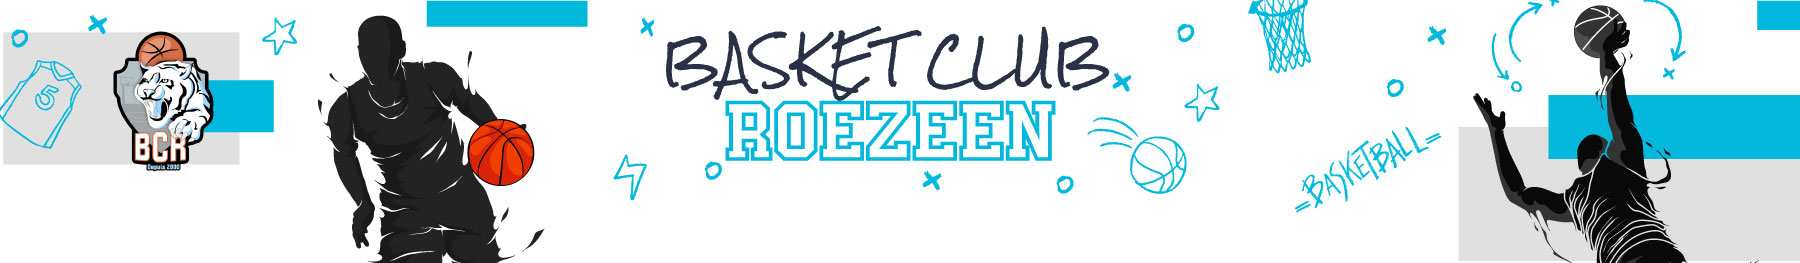 Bannière BASKET CLUB ROEZEEN